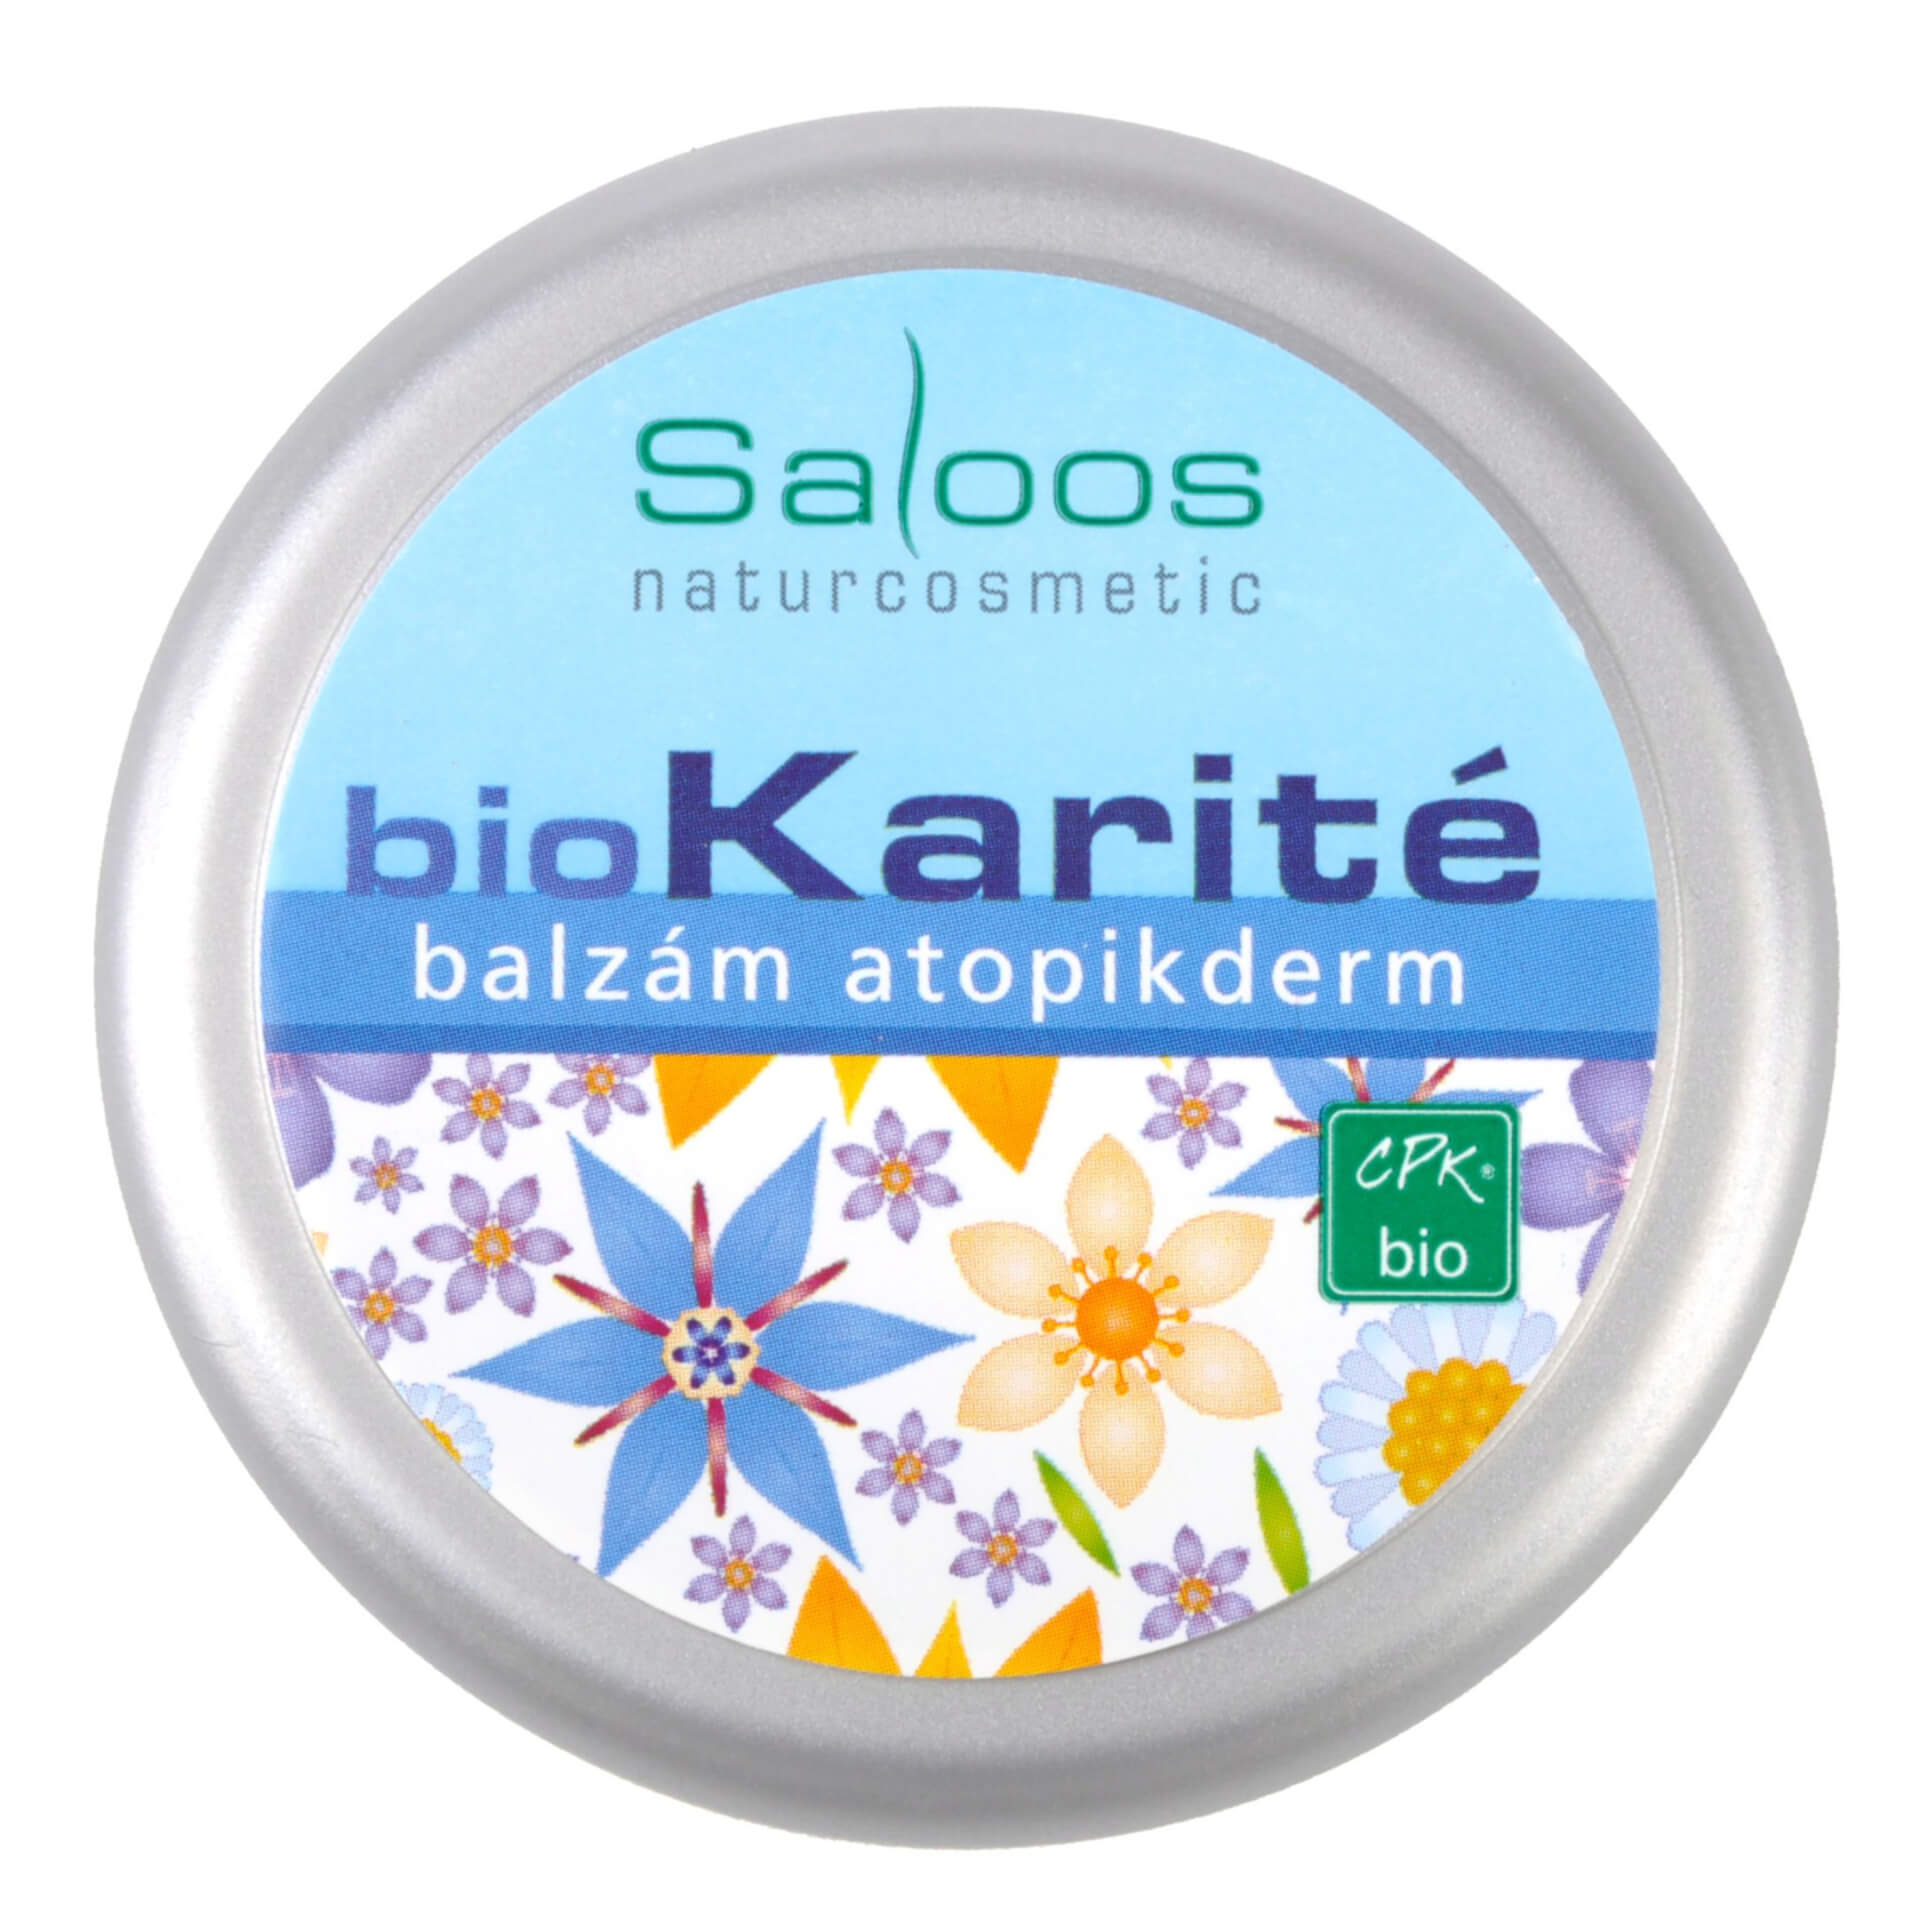 E-shop Saloos Balzam bio karité Atopikderm 50 ml